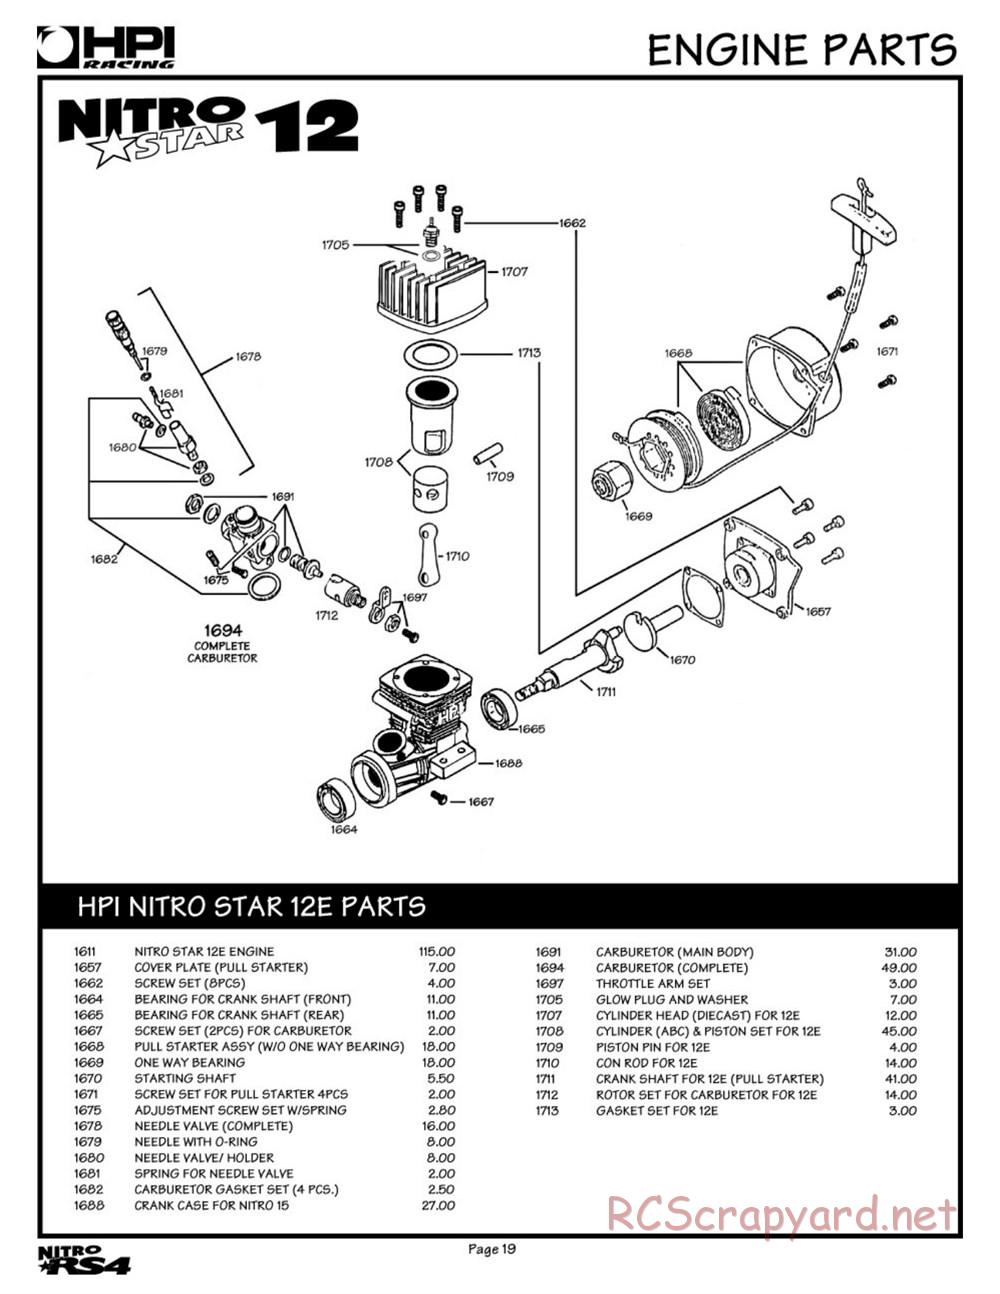 HPI - Nitro RS4 - Manual - Page 19